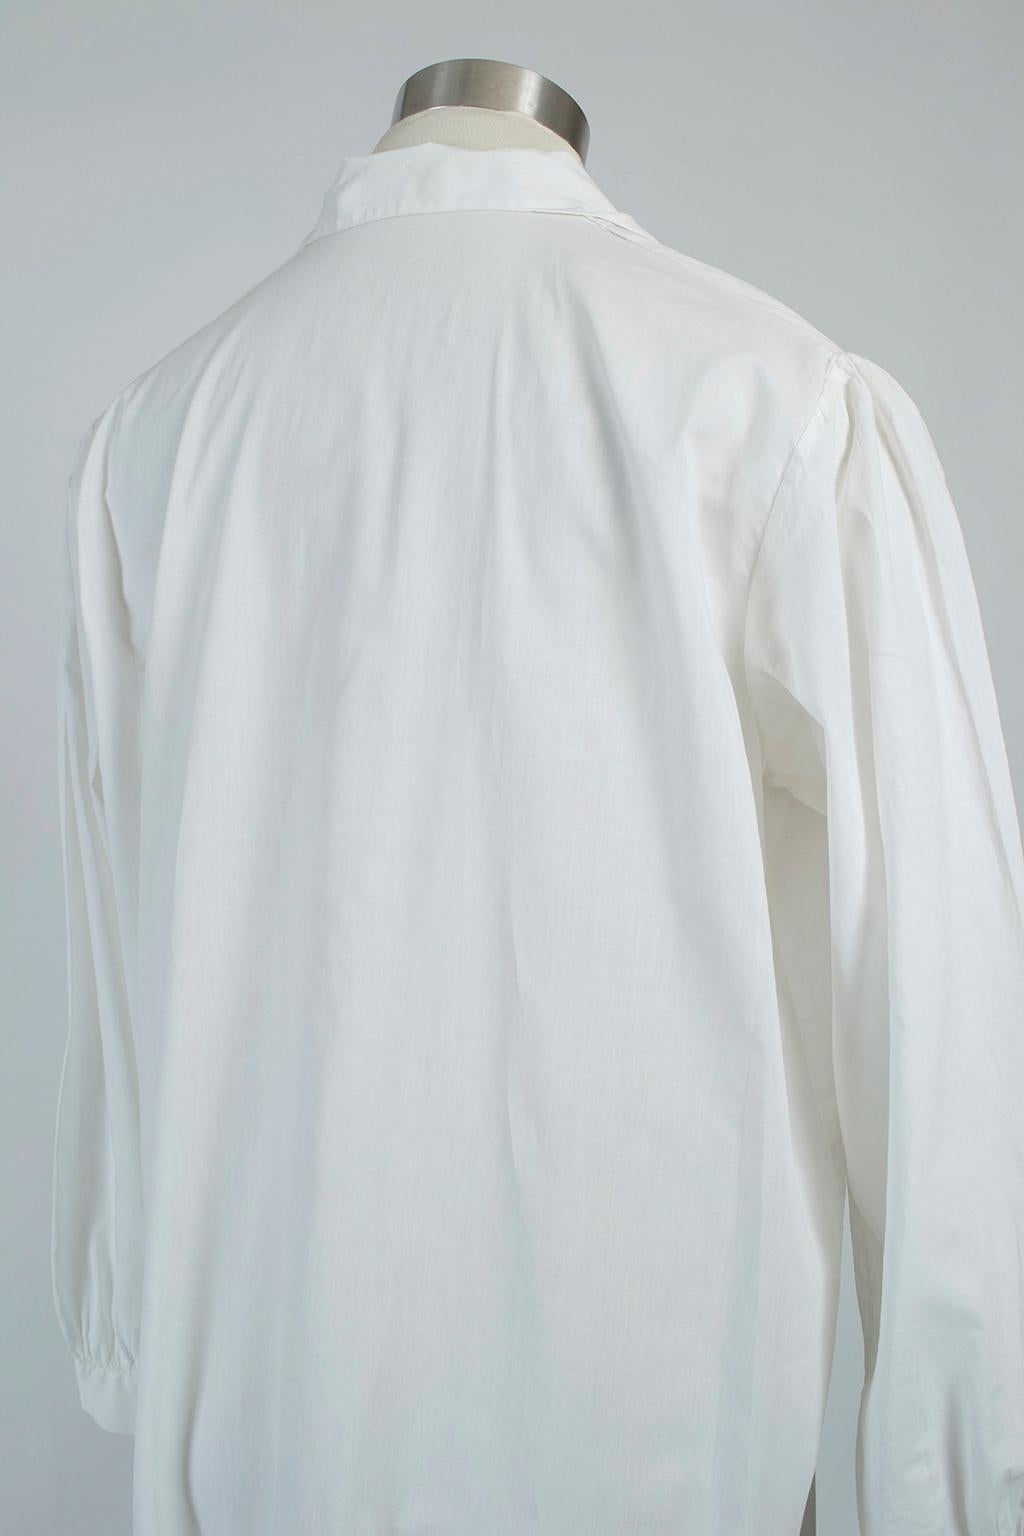 Edwardian White Embroidered Cotton Poplin Nightshirt Sleep Shirt - M, 1910s In Good Condition For Sale In Tucson, AZ